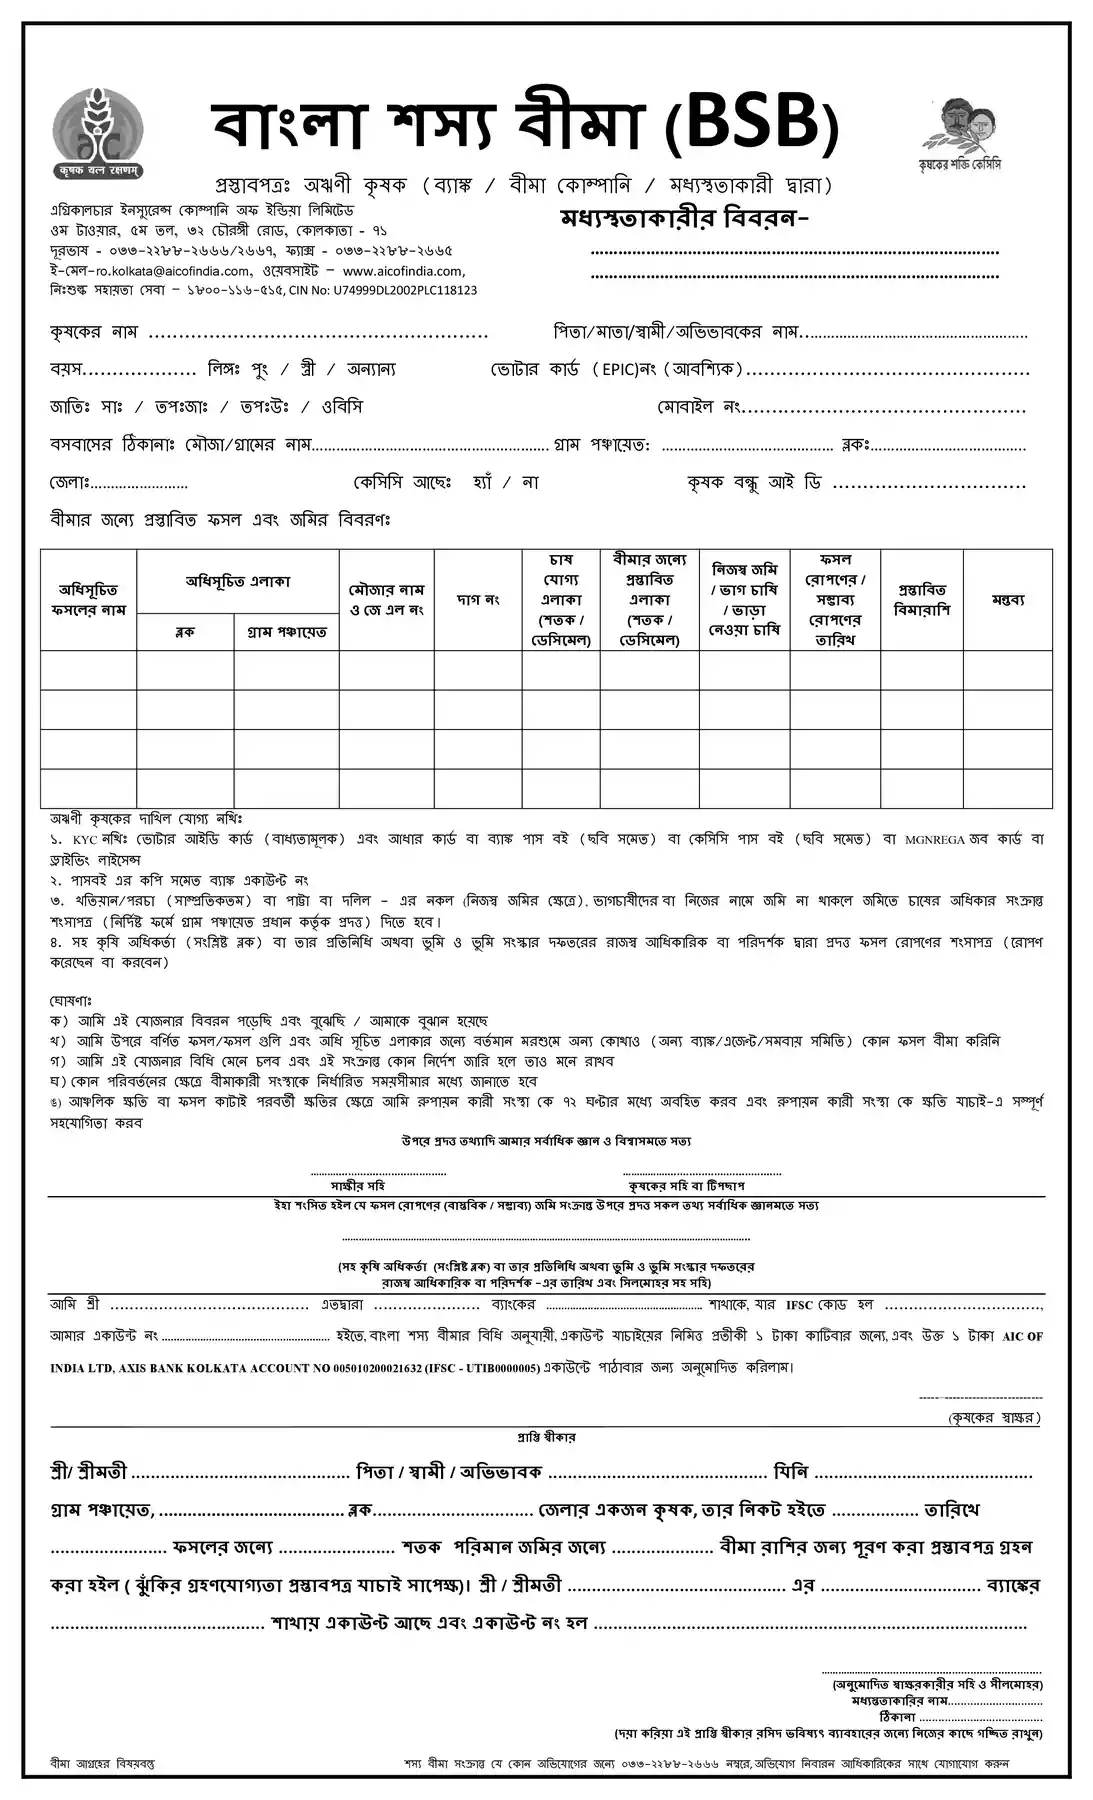 Bangla shasya bima 2023 form pdf